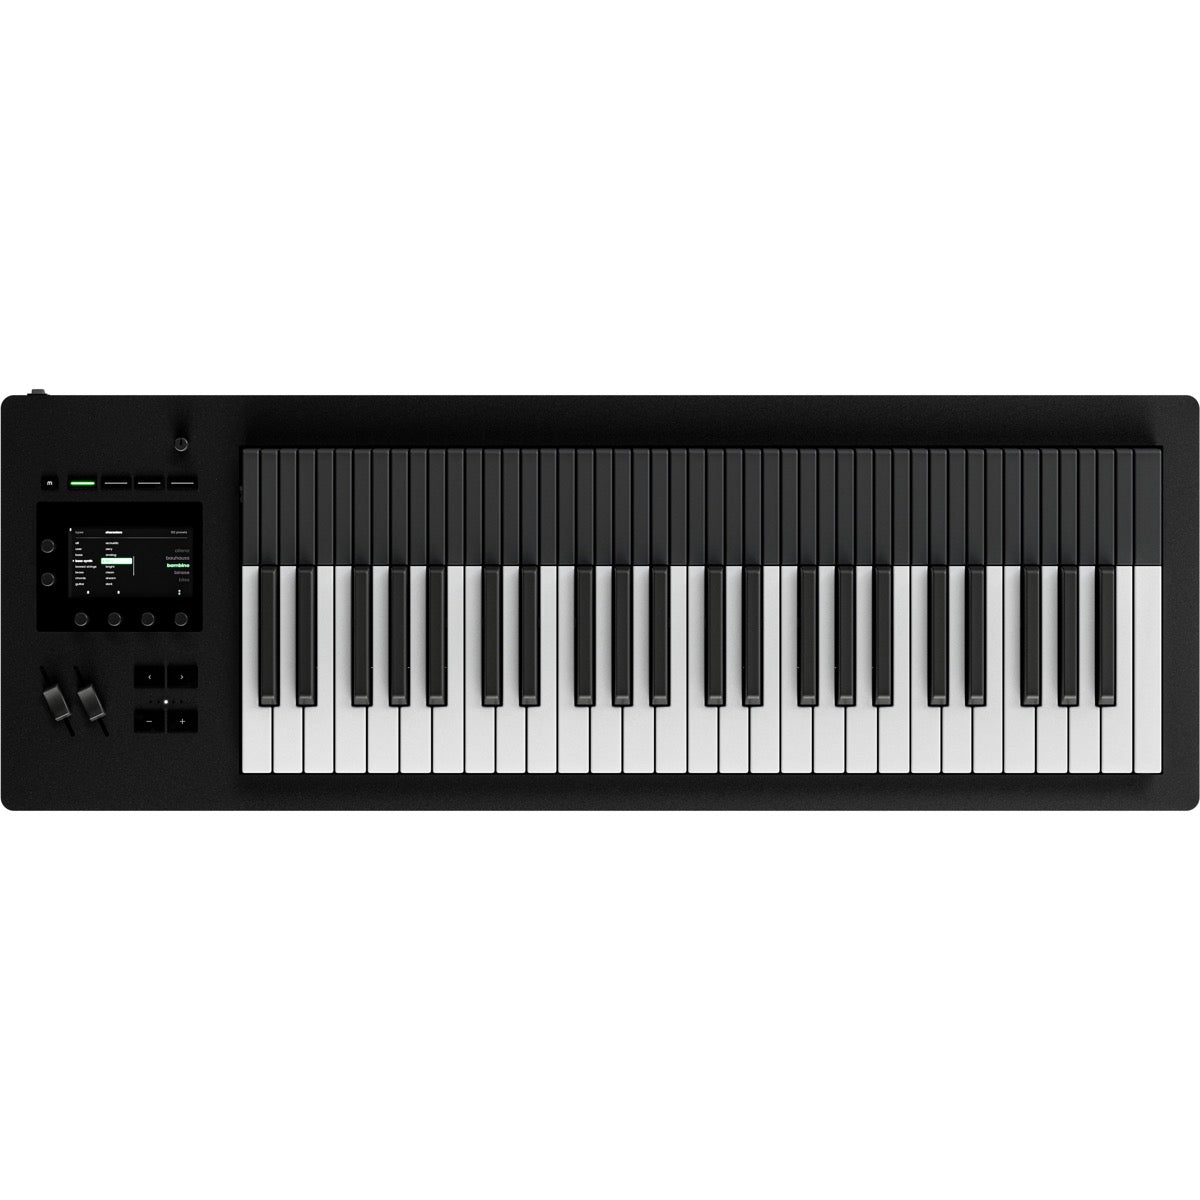 Expressive E Osmose 49-Key Synthesizer & MPE MIDI Controller View 3